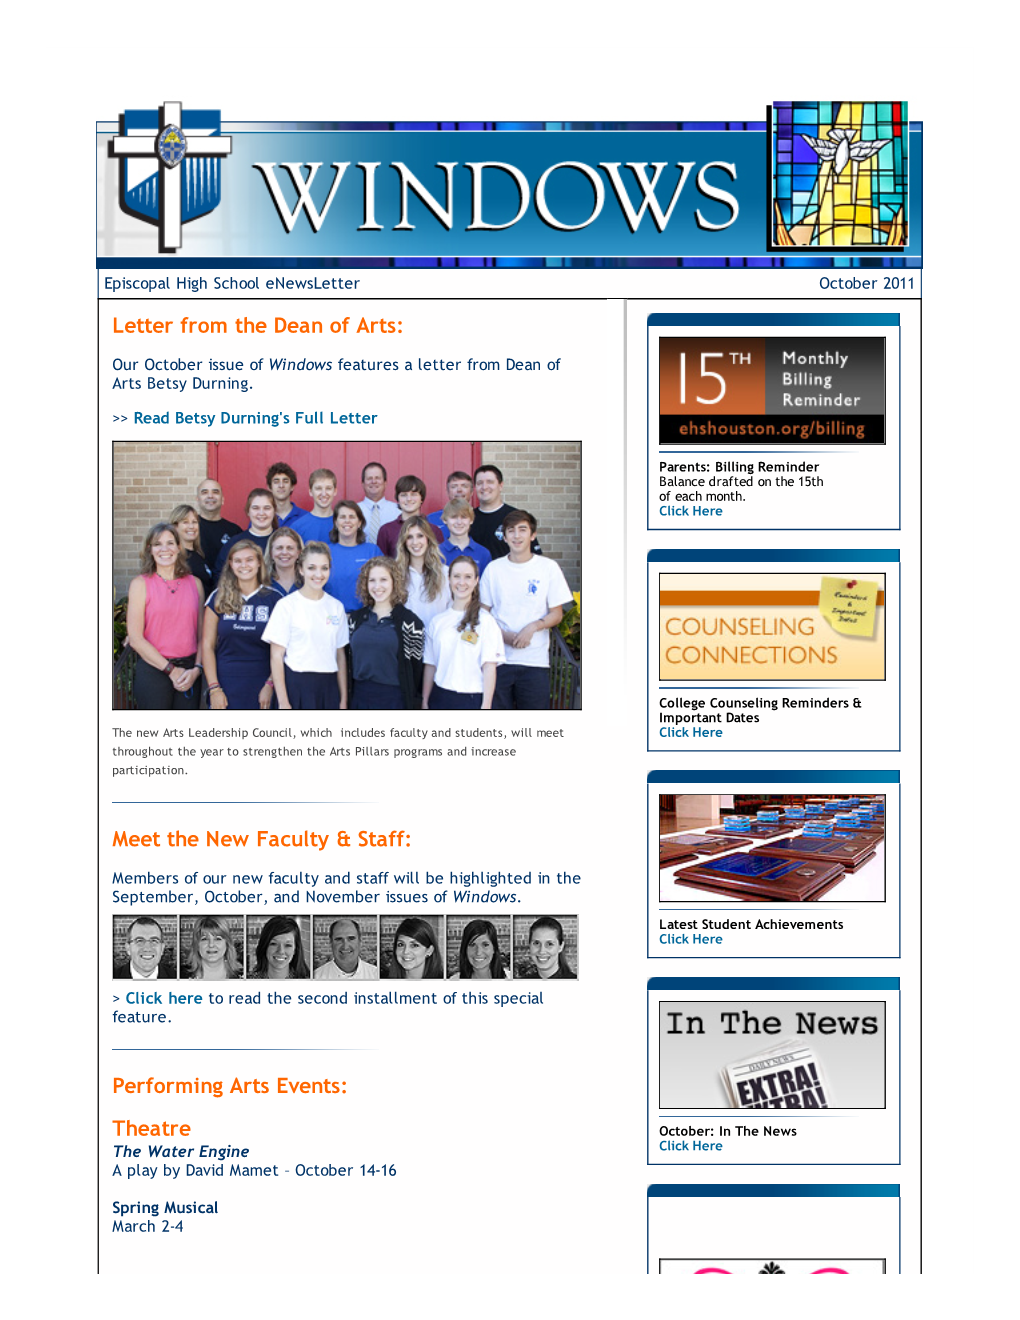 EHS Windows: October 2011